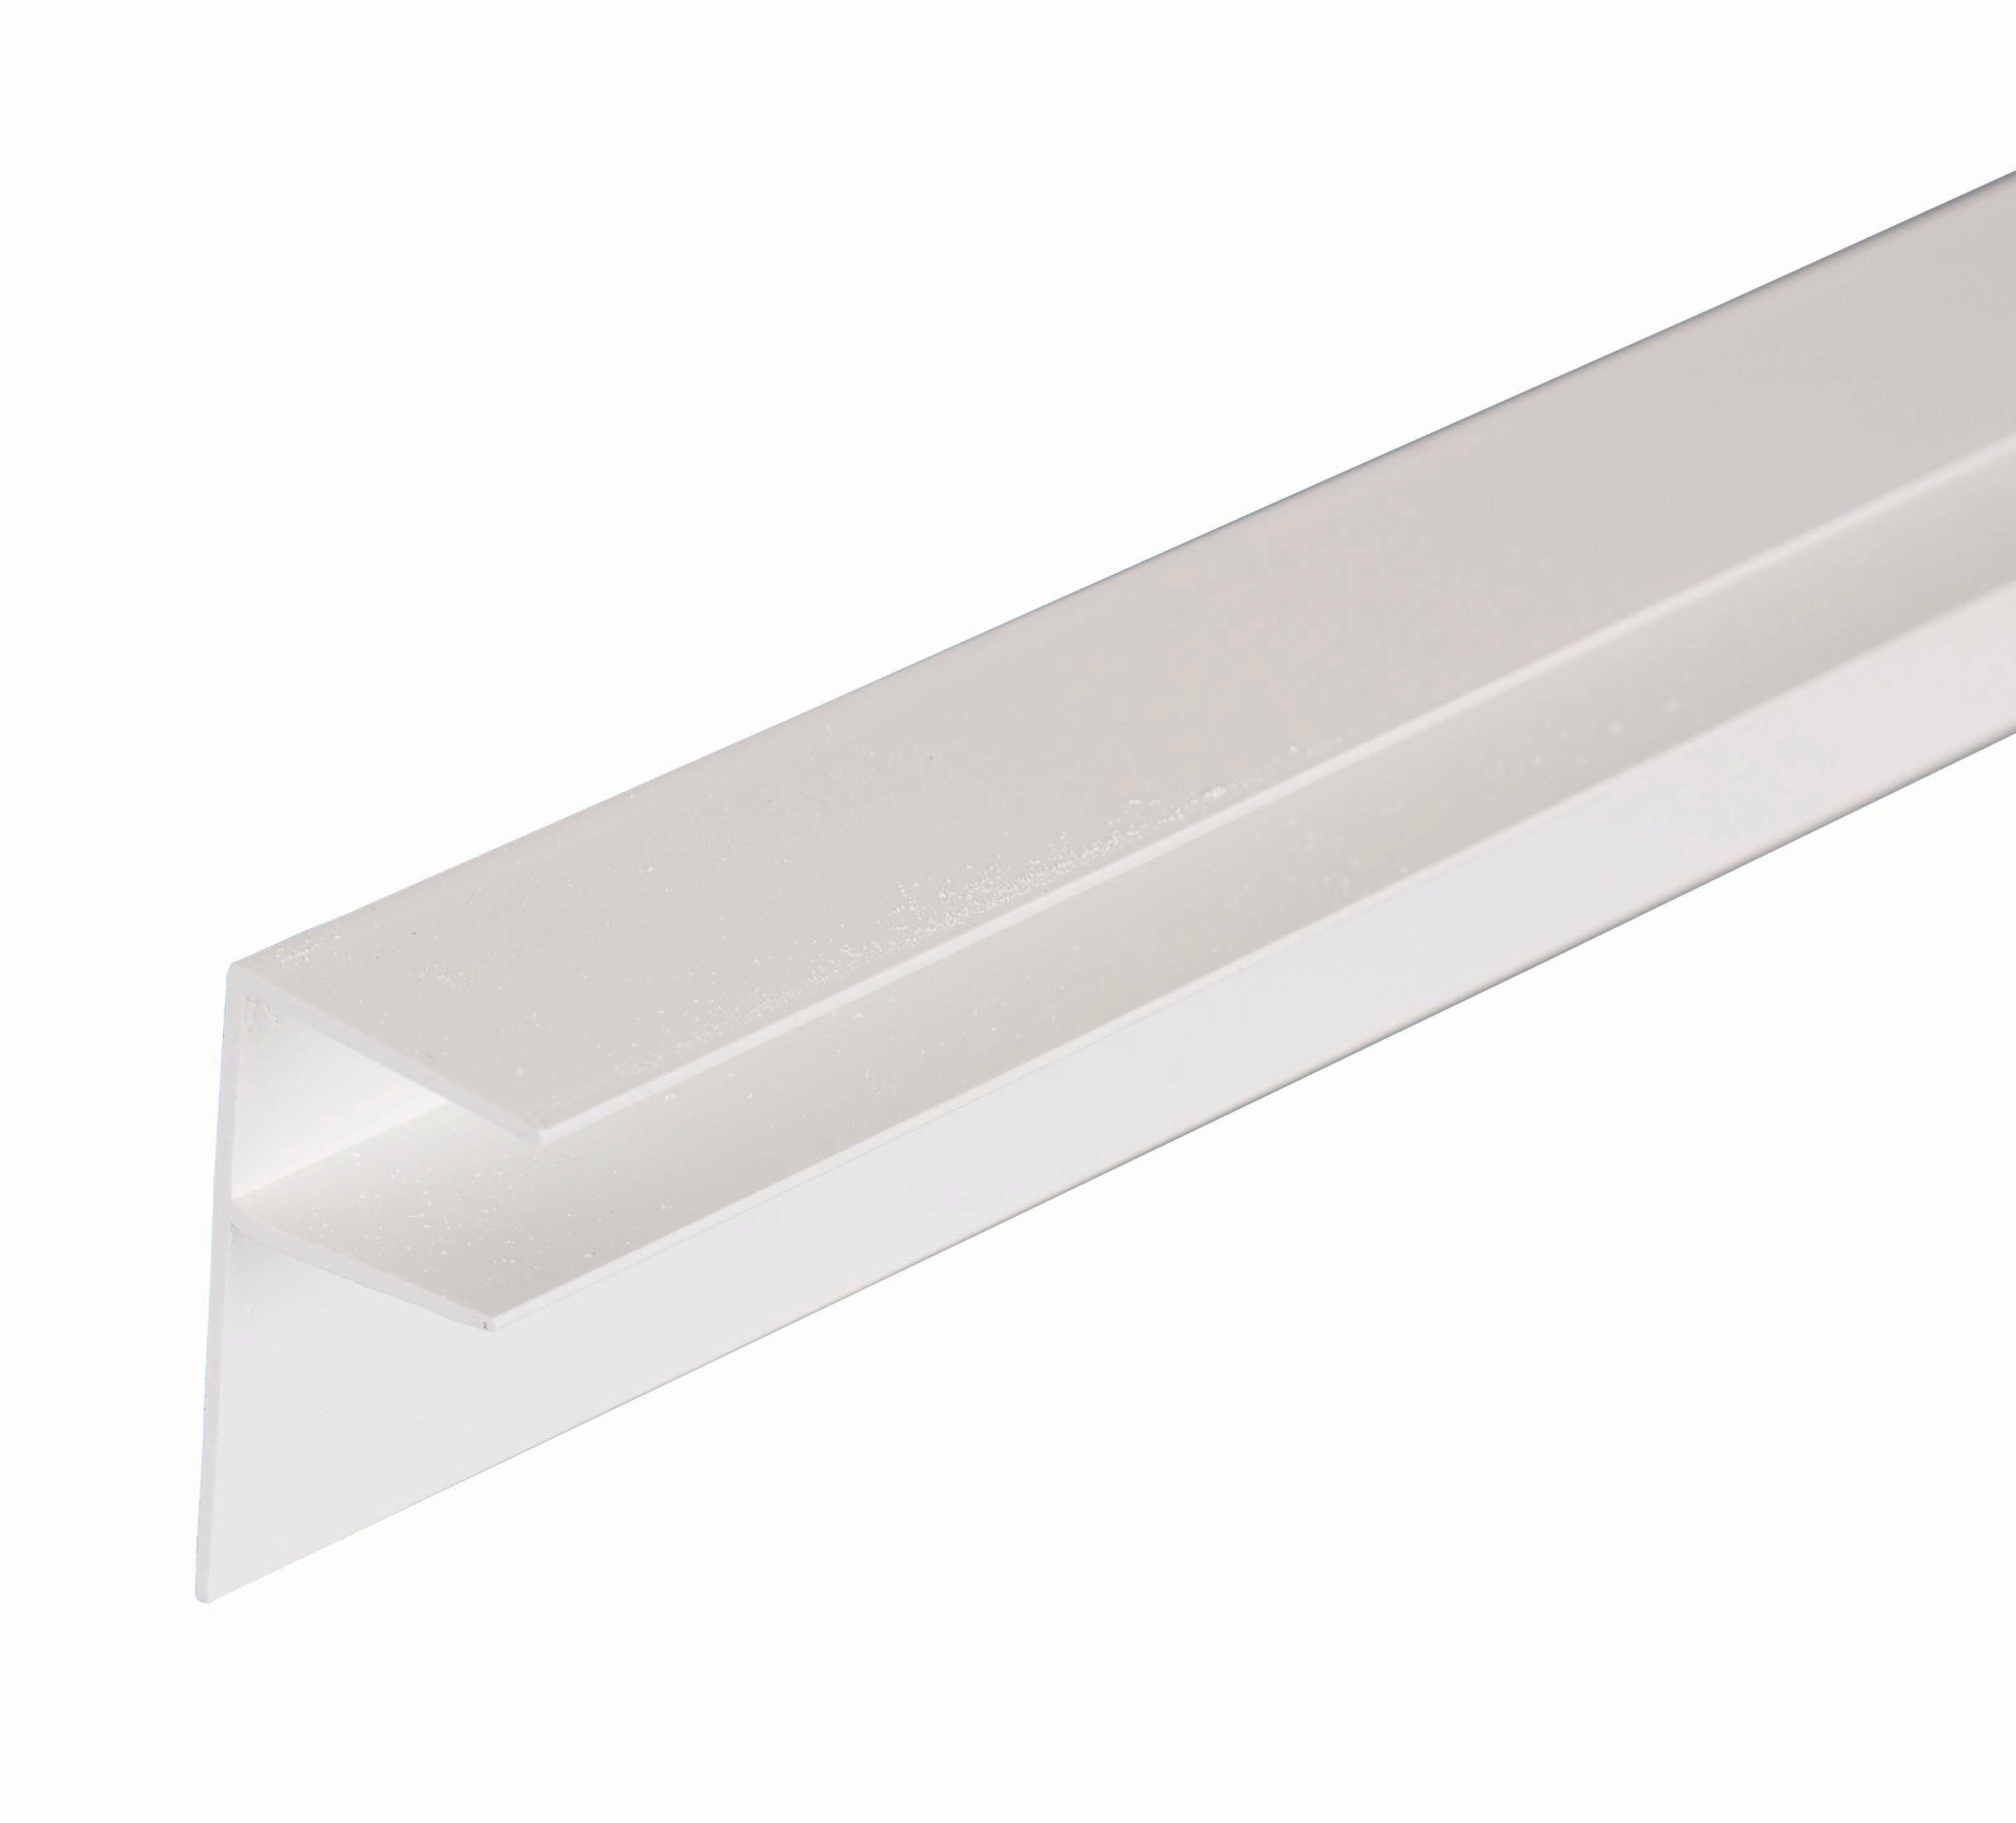 25mm PVC Side Flashing - White 6m